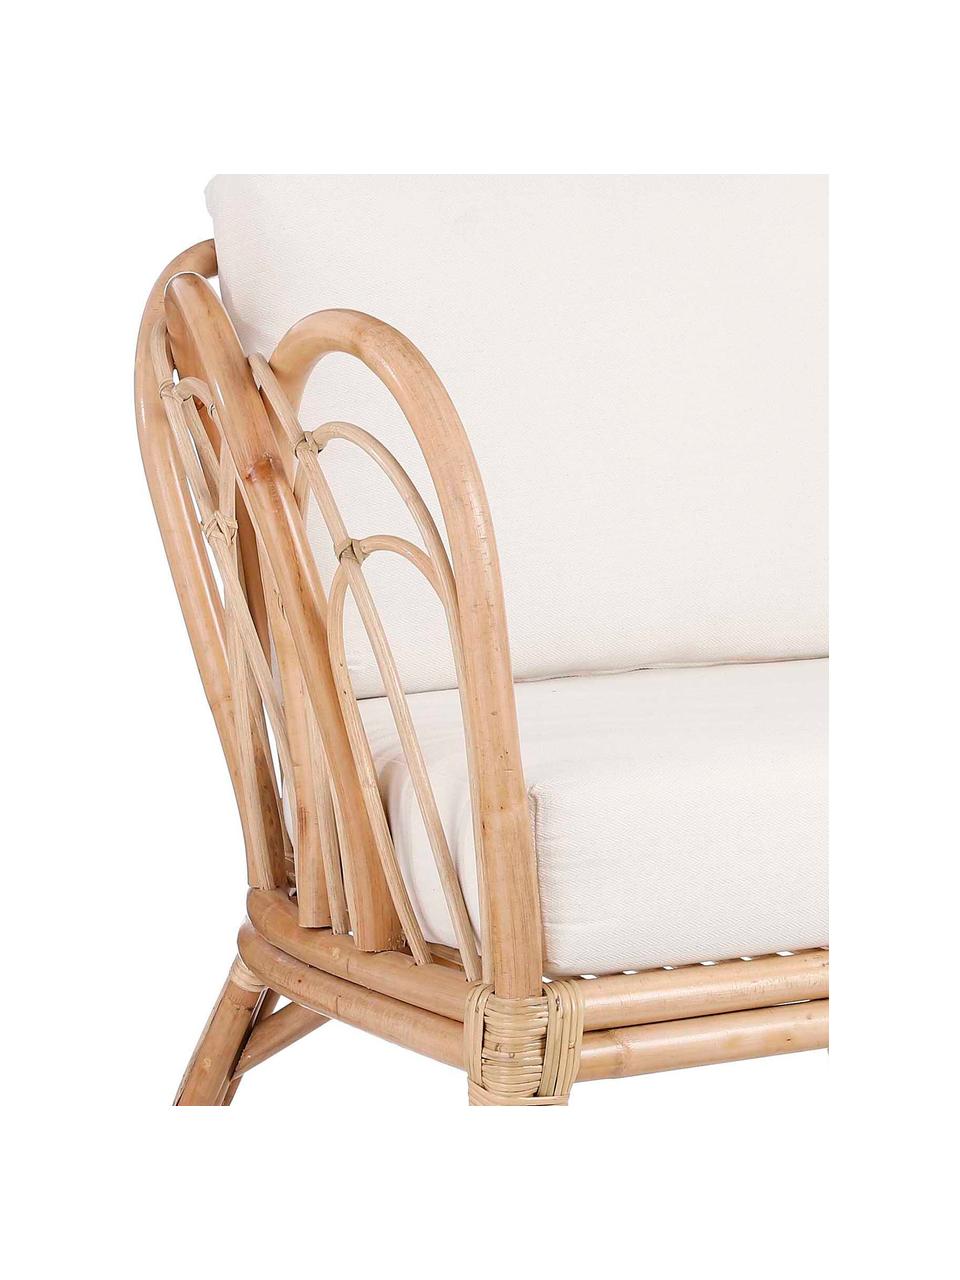 Chaise en rotin avec coussin Sherbrooke, Brun clair, blanc, larg. 83 x prof. 72 cm